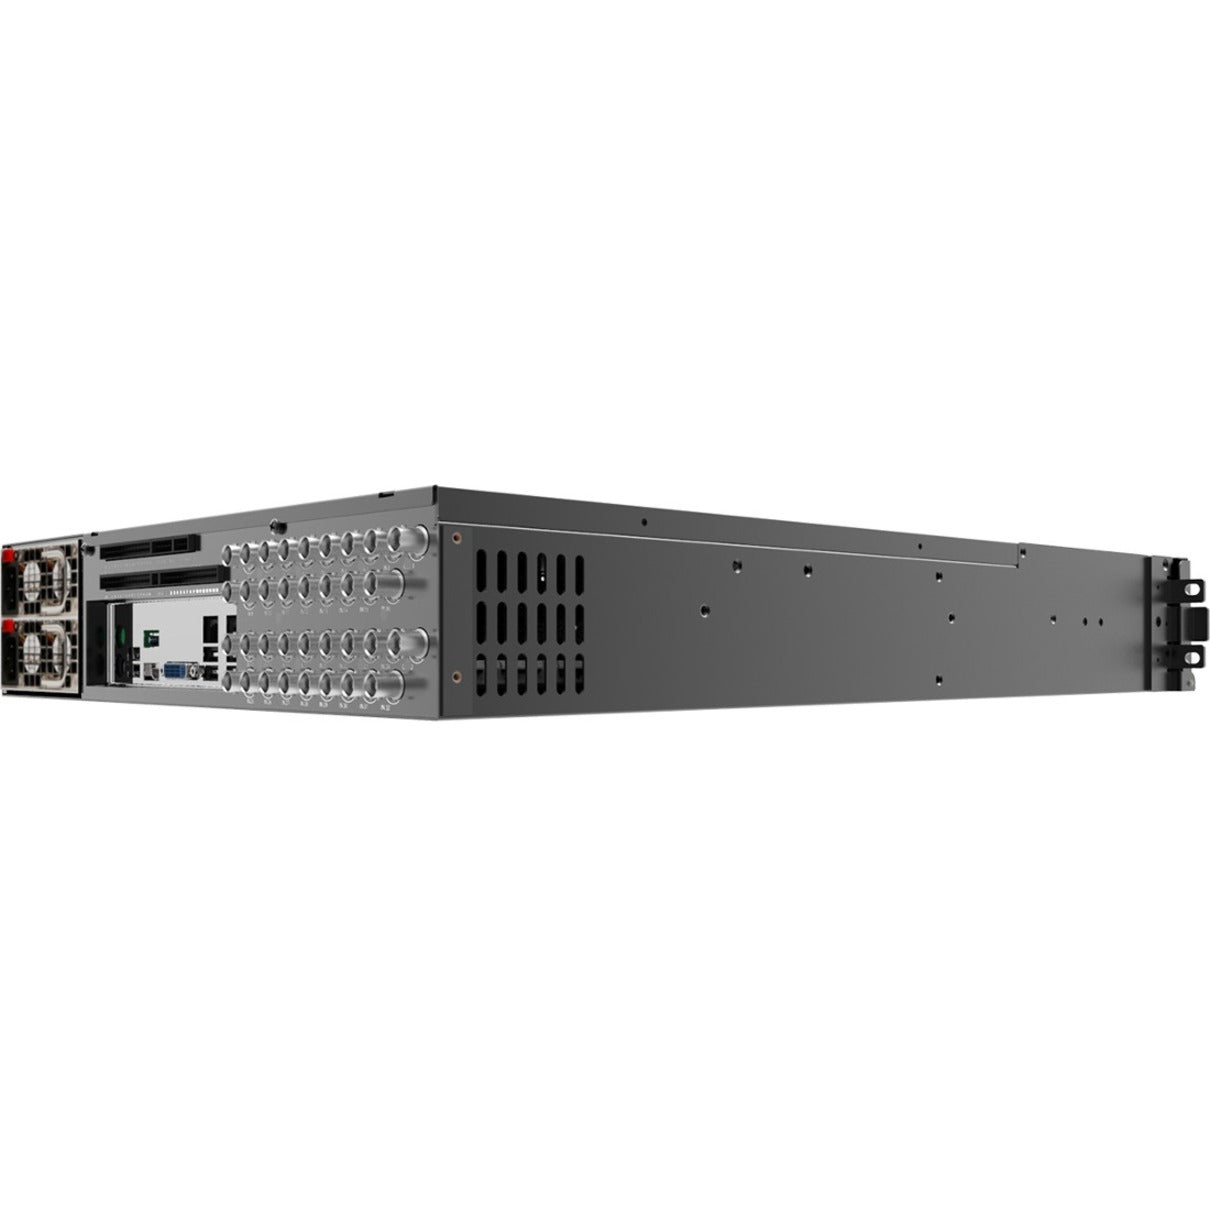 Exacq exacqVision Z Network Surveillance Server - 56 TB HDD